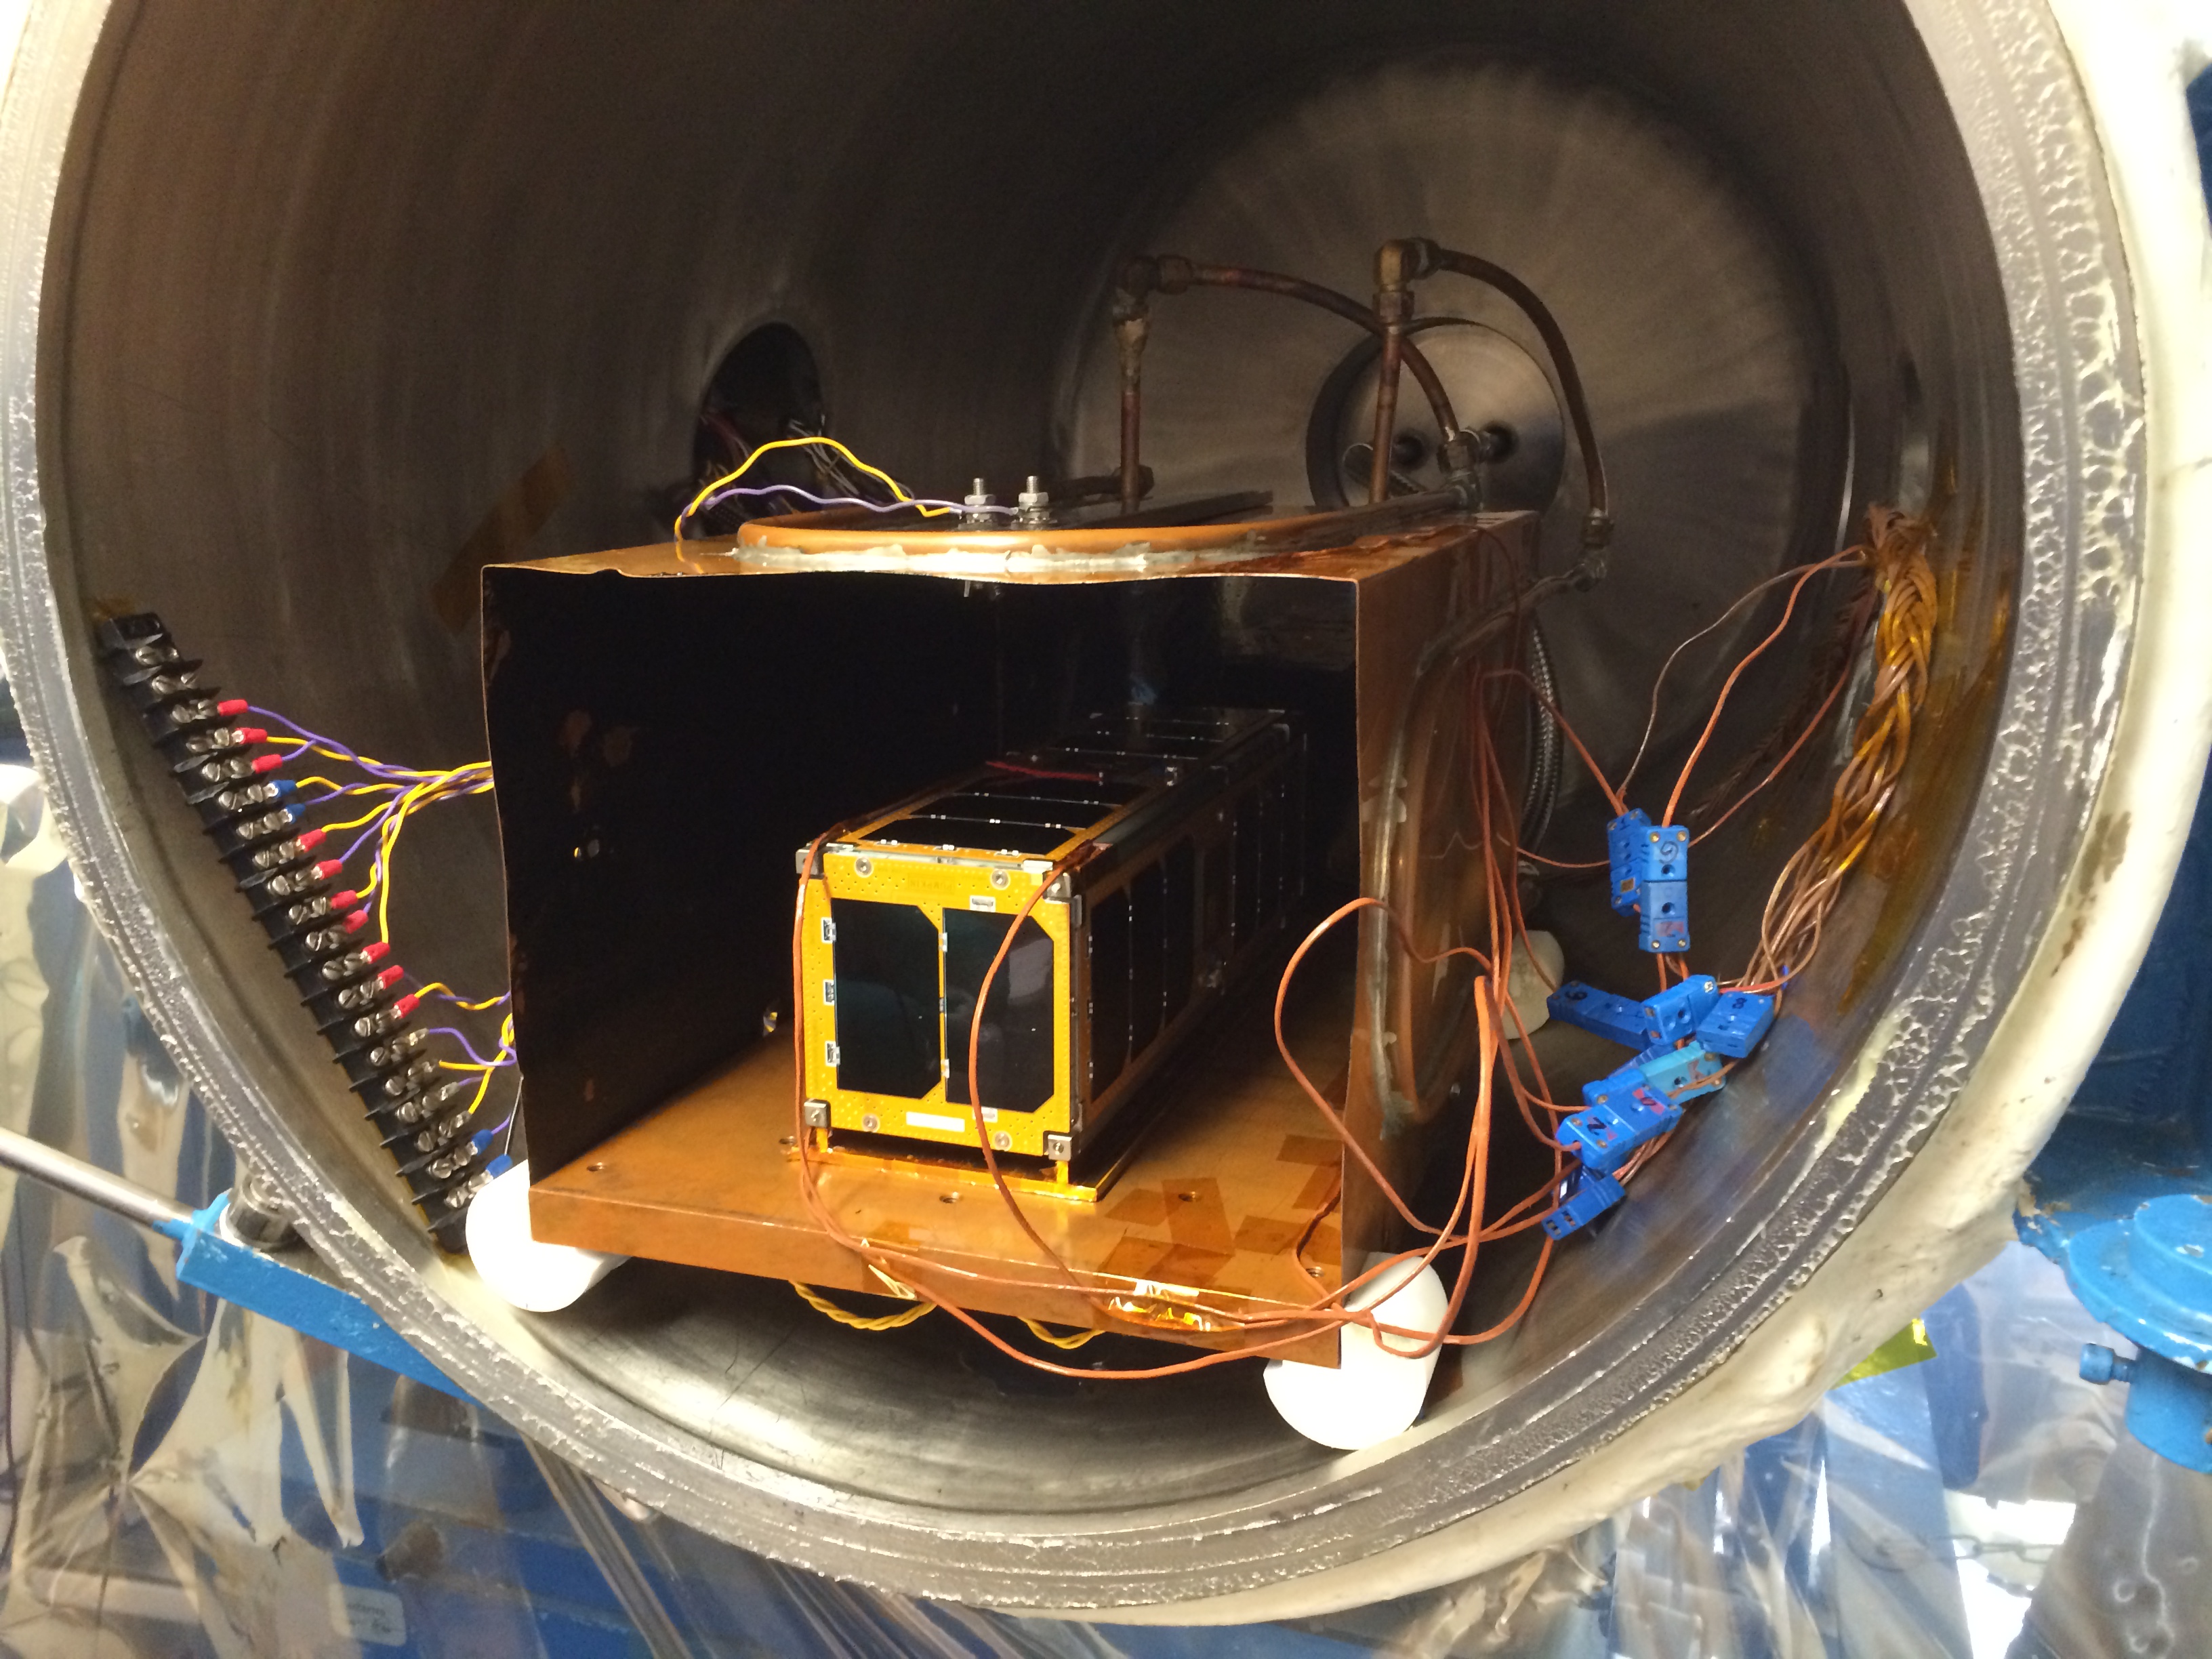 How CubeSats are revolutionizing radio science pic